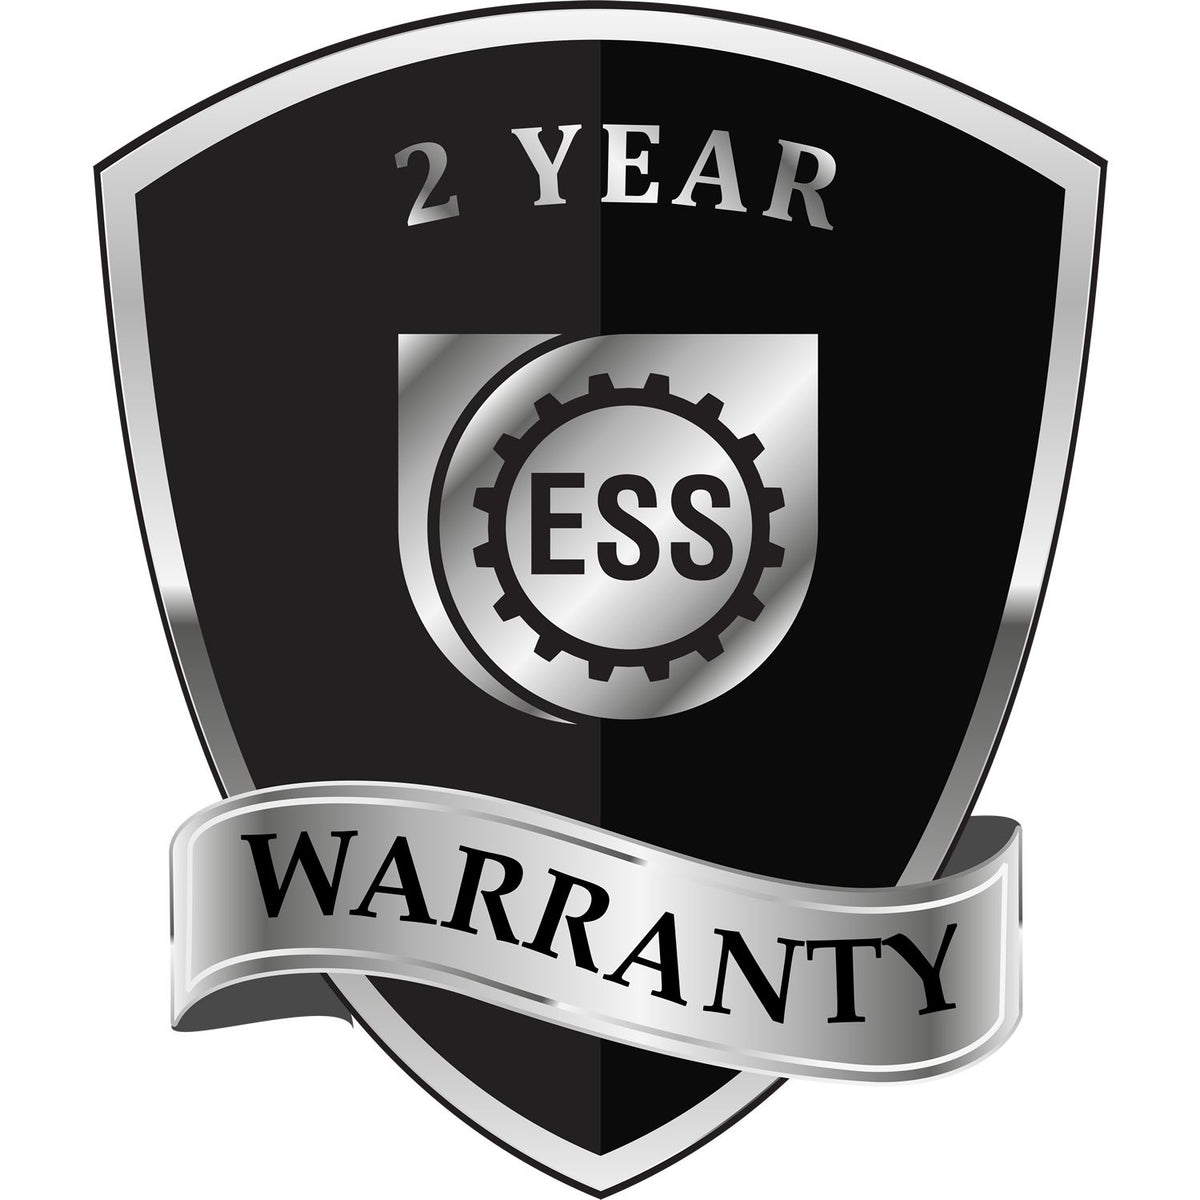 A black and silver badge or emblem showing warranty information for the Gift Alabama Landscape Architect Seal